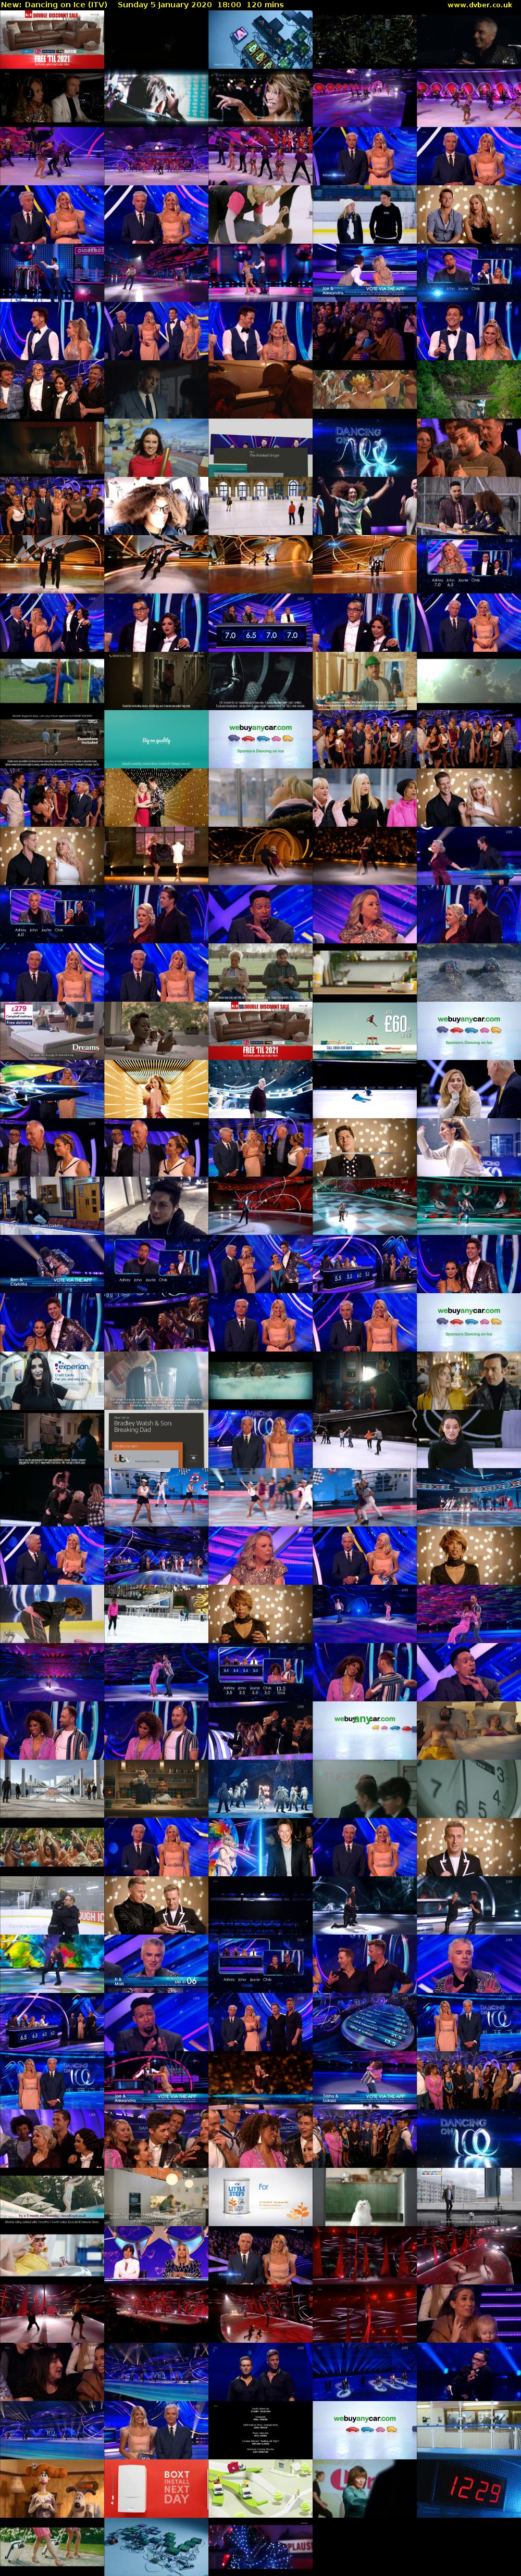 Dancing on Ice (ITV) Sunday 5 January 2020 18:00 - 20:00